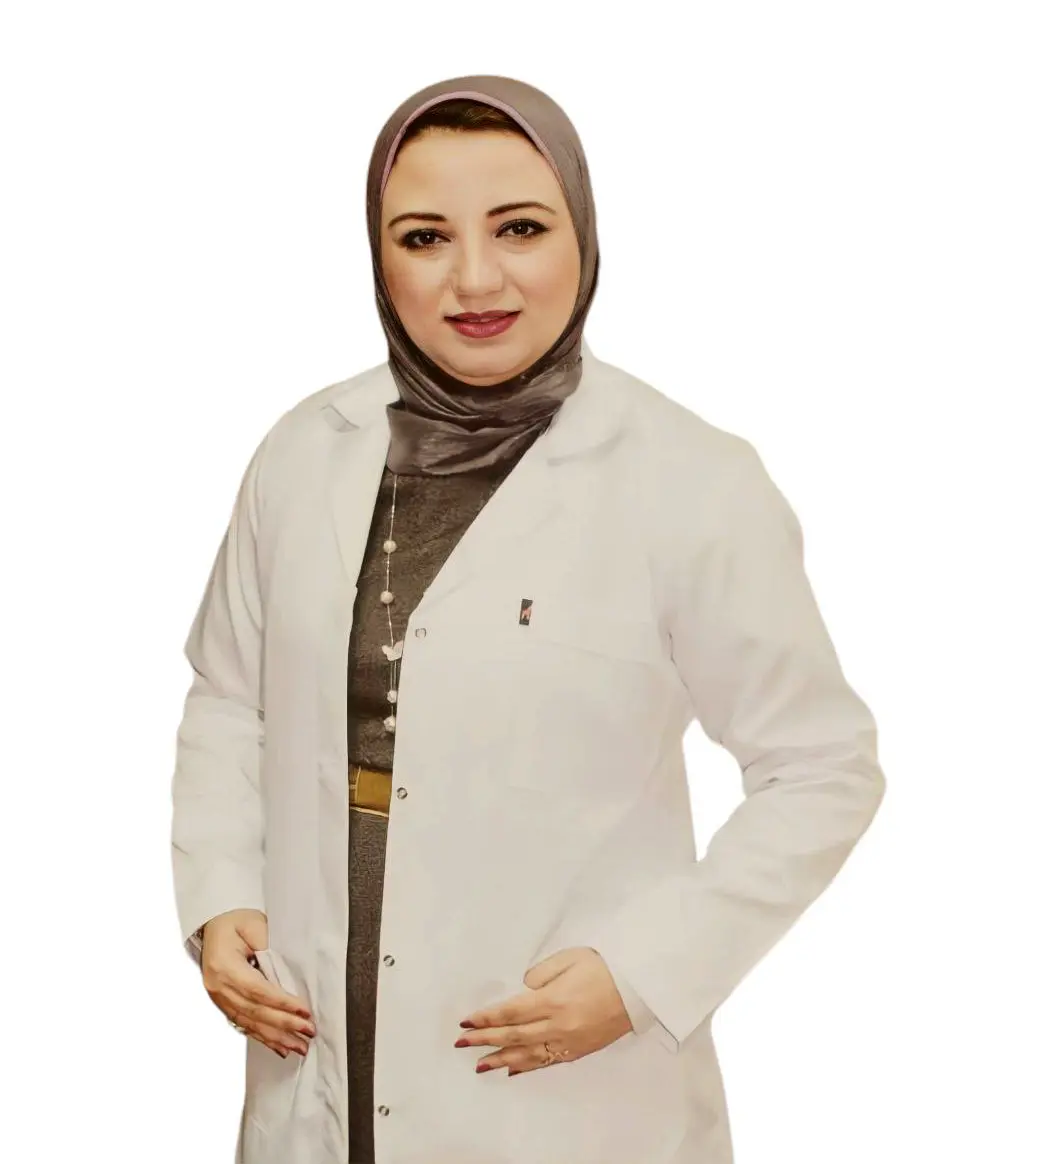 Dr Eman Eziza